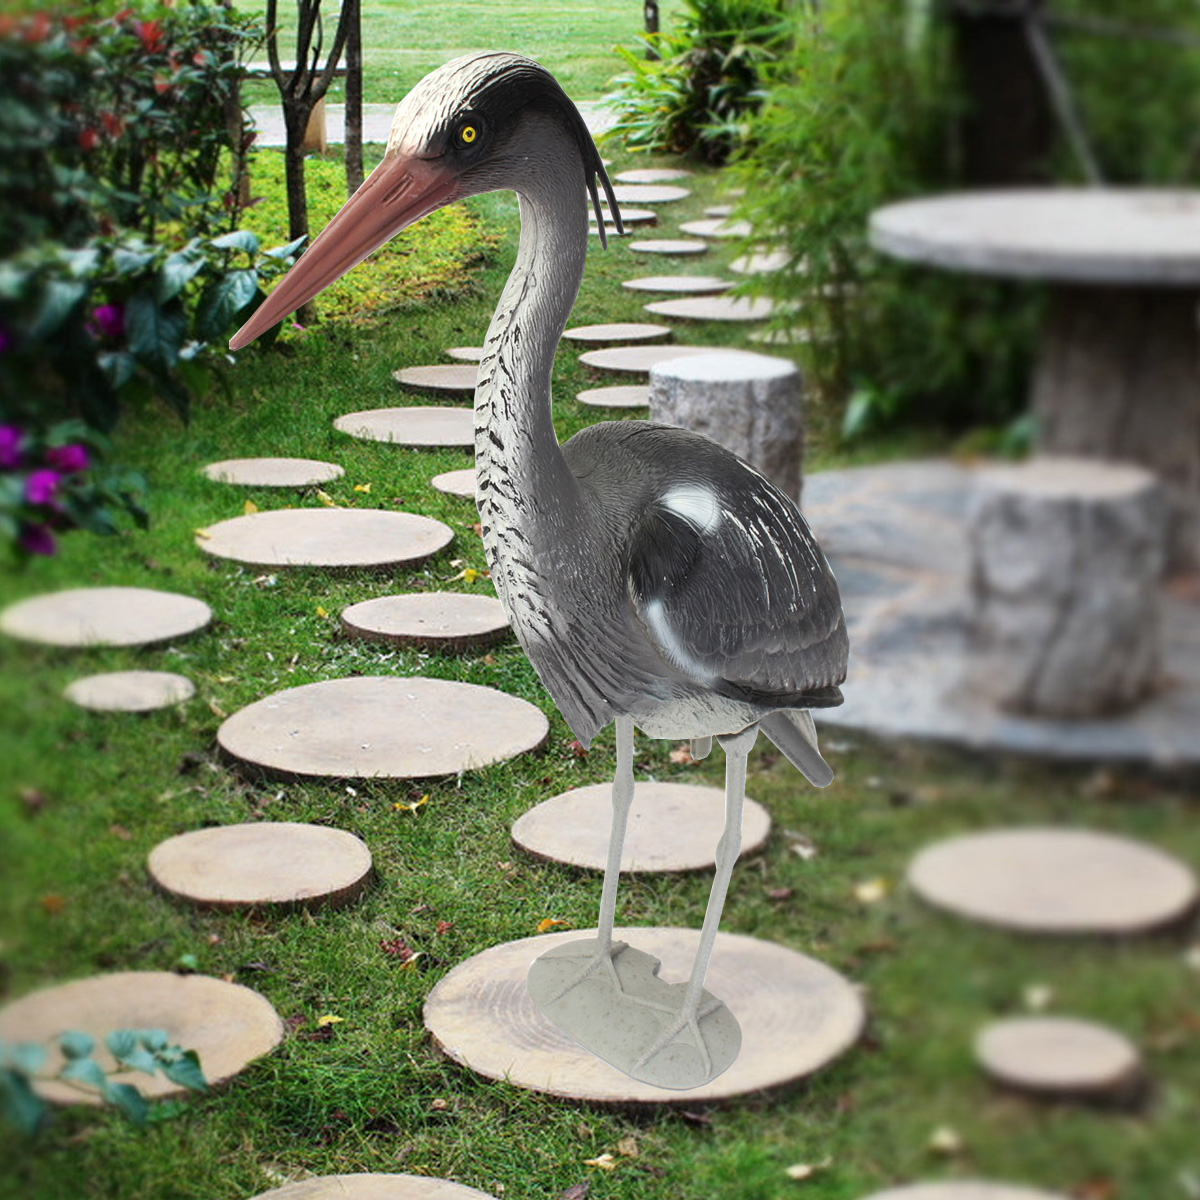 Large-Plastic-Resin-Decoy-Heron-Garden-Decorations-Bird-Scarer-Fish-Pond-Koi--Decorations-1001076-6